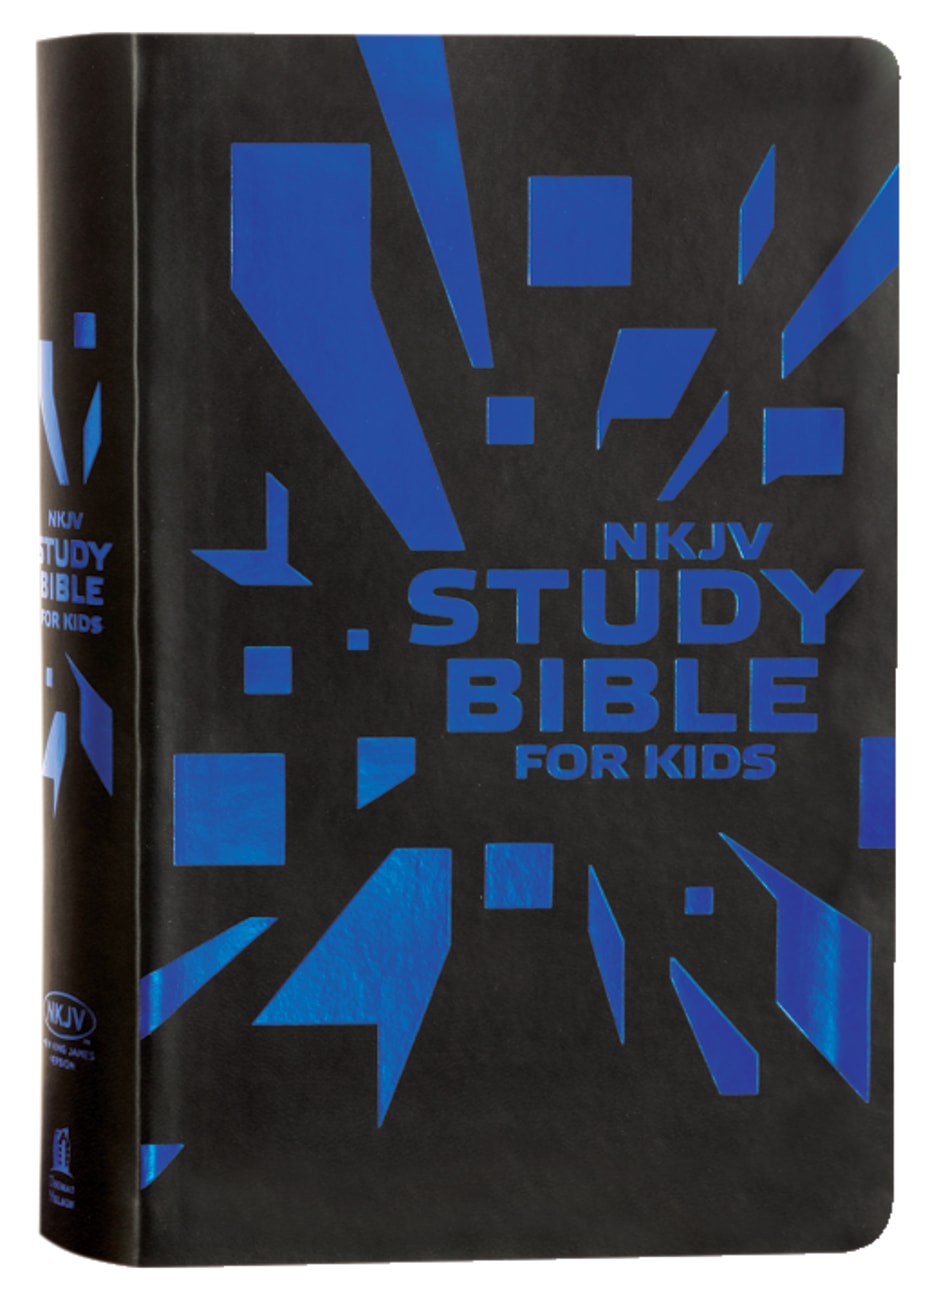 NKJV Study Bible For Kids Grey/Blue Cover (Black Letter Edition) Premium Imitation Leather